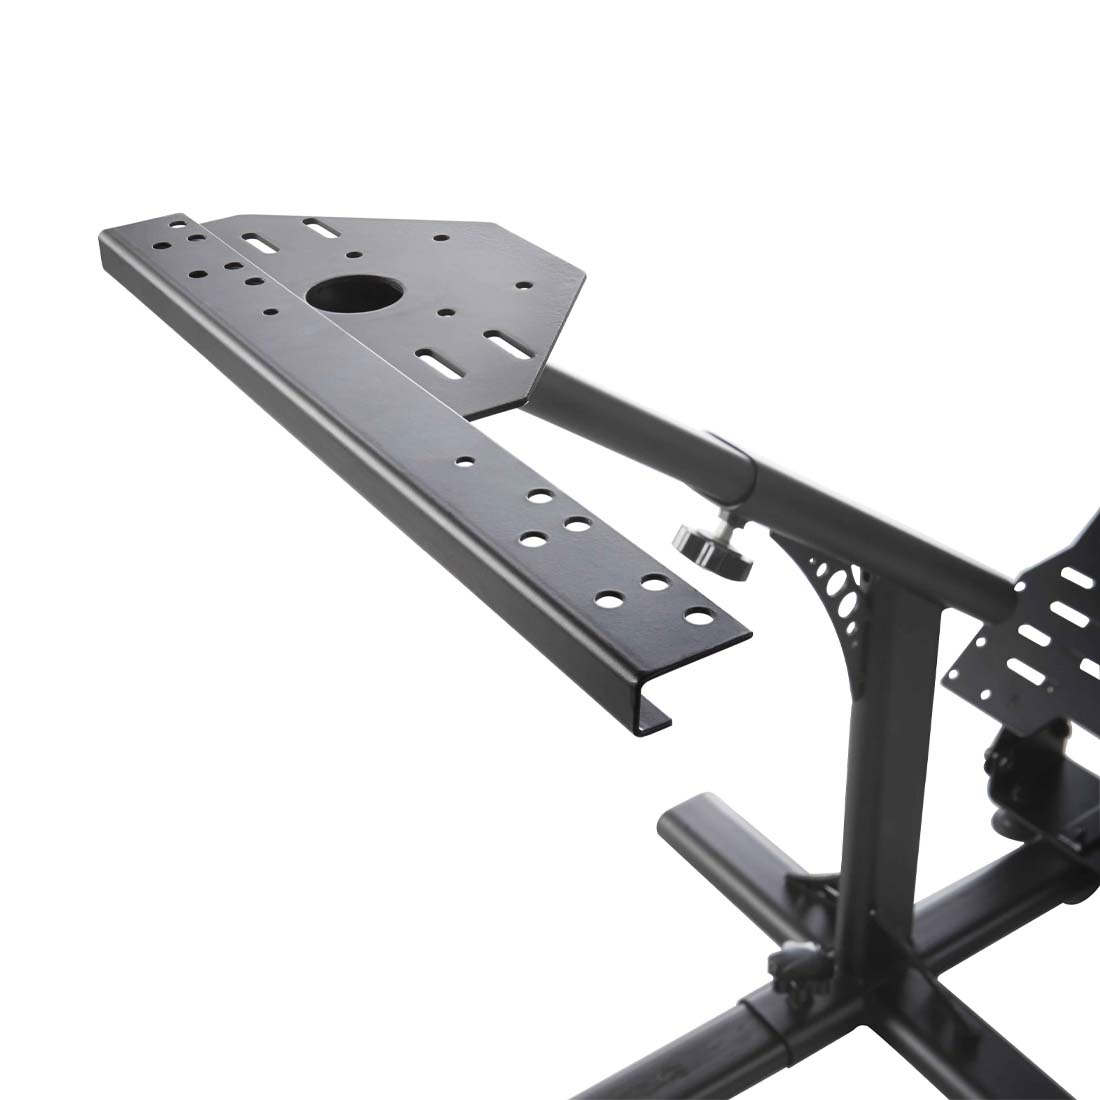 Playseat Evolution Black ActiFit Gaming Chair + Gearshift Support RAC00168 + Floor Mat XL RAC00178 - تجميعة ألعاب - Store 974 | ستور ٩٧٤